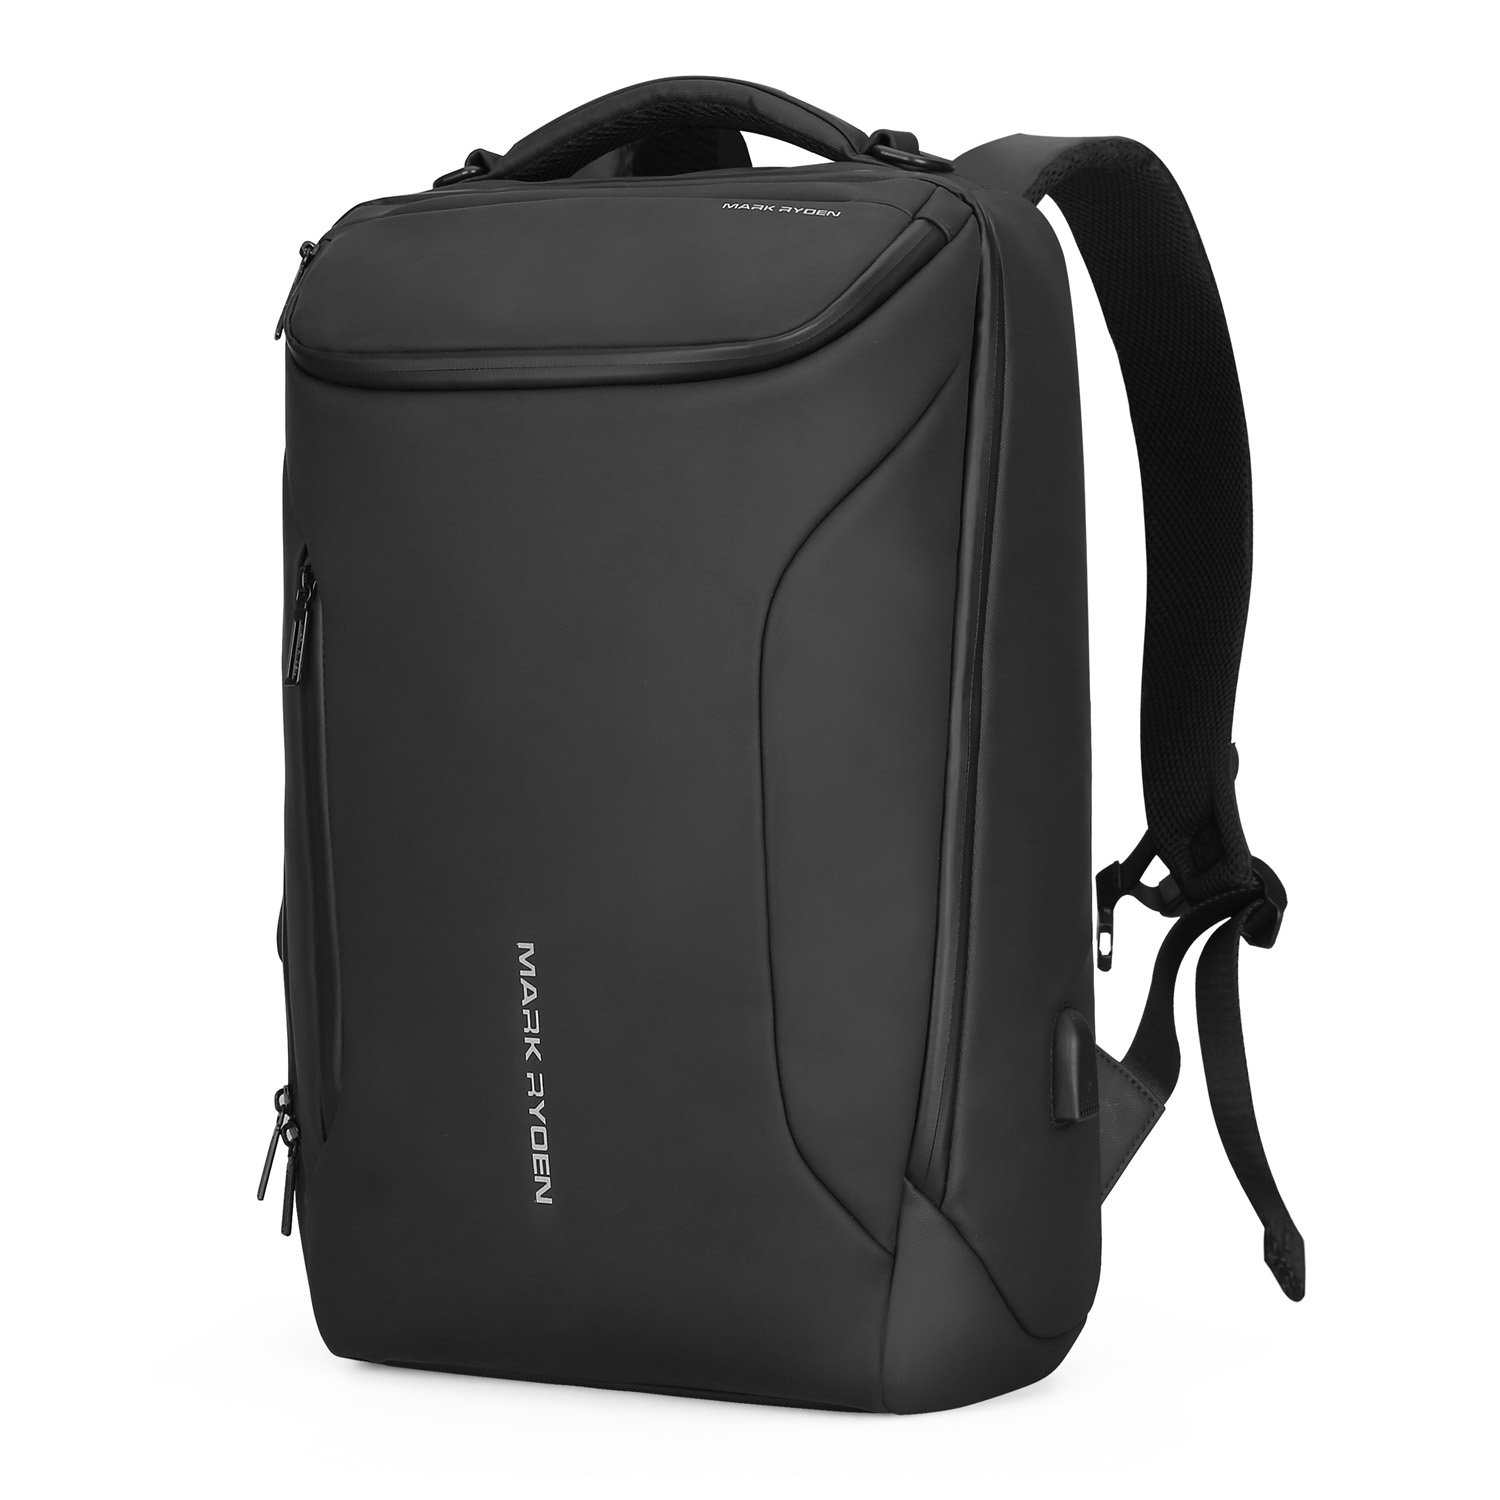 Mark Ryden "NAVARRO II 2 Pocket" Business & Travel USB Charging laptop Backpack, Ergonomic Straps, Anti-Theft Pocket